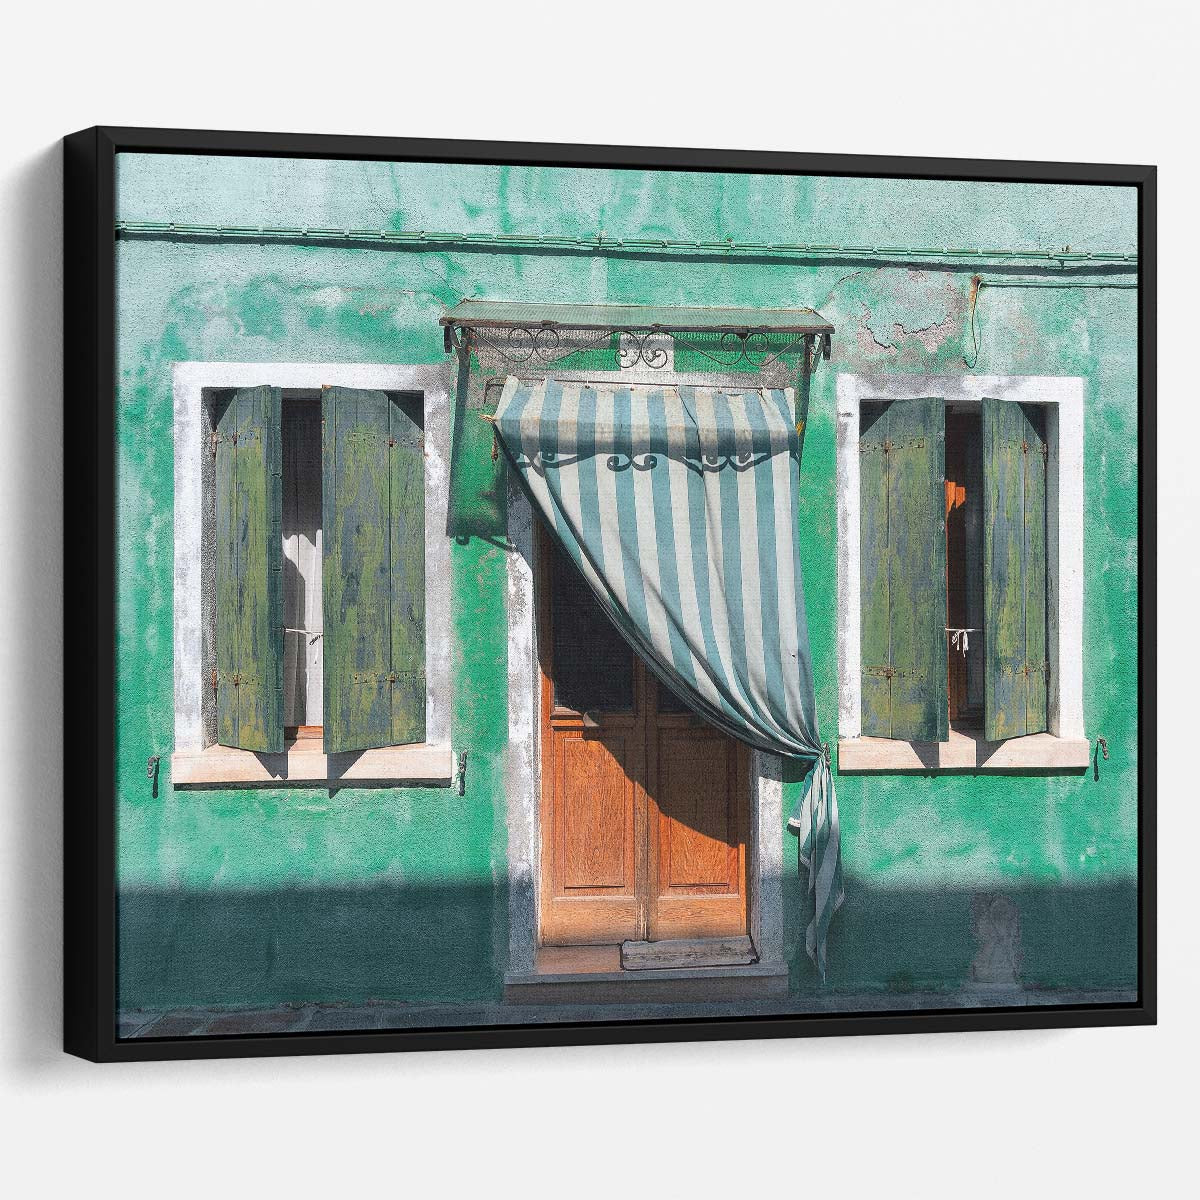 Venetian Green Shuttered Window Facade Wall Art by Luxuriance Designs. Made in USA.